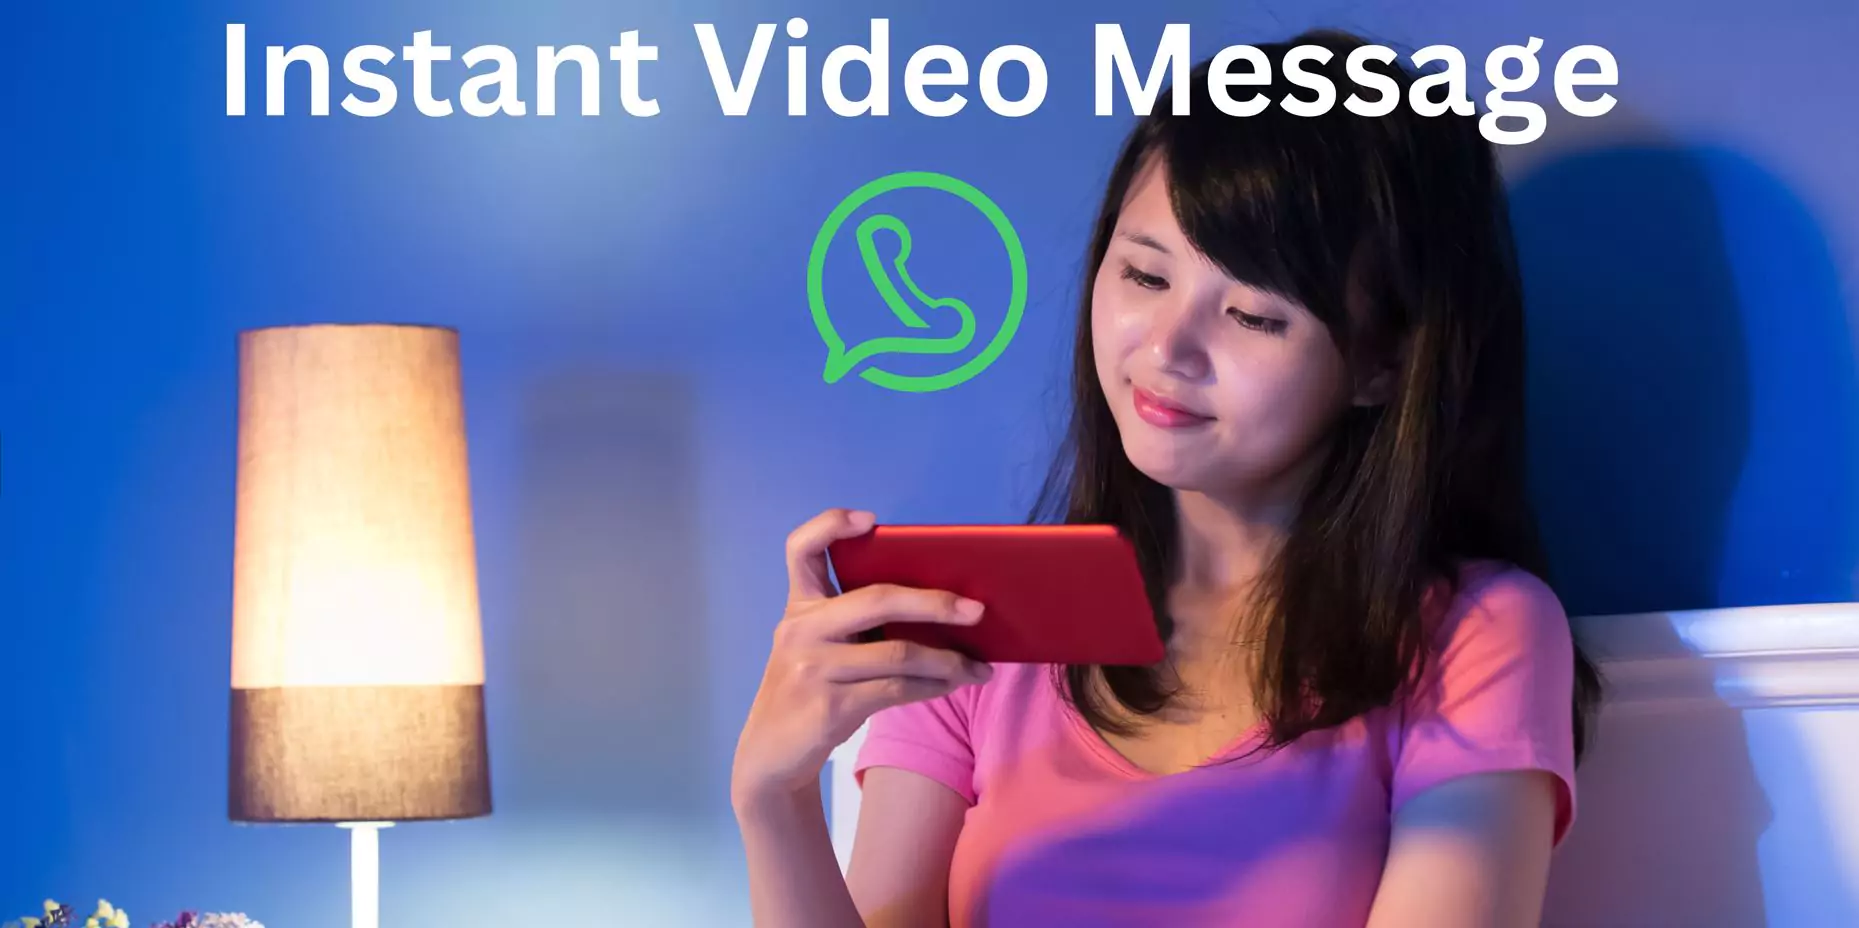 WhatsApp Instant Video Message